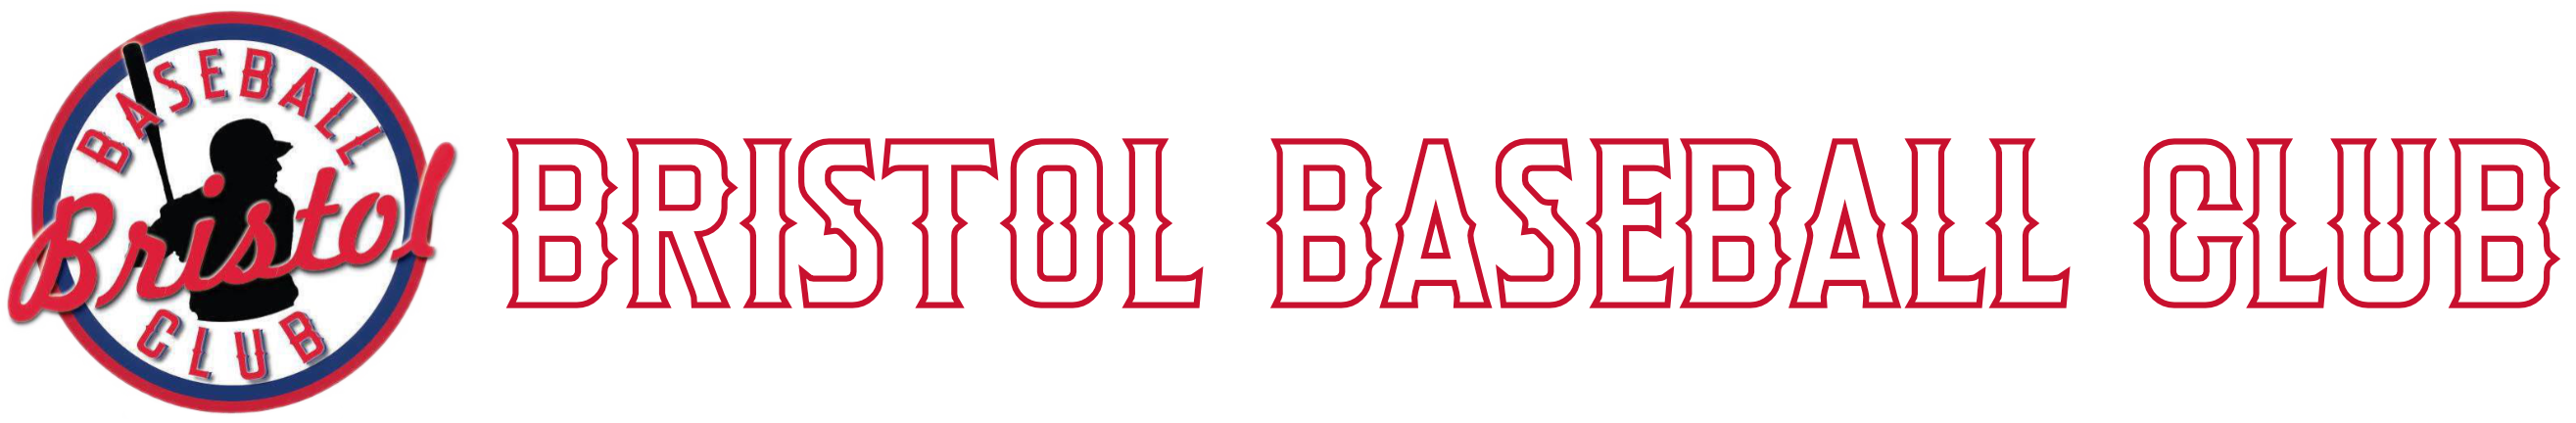 Bristol Baseball Club